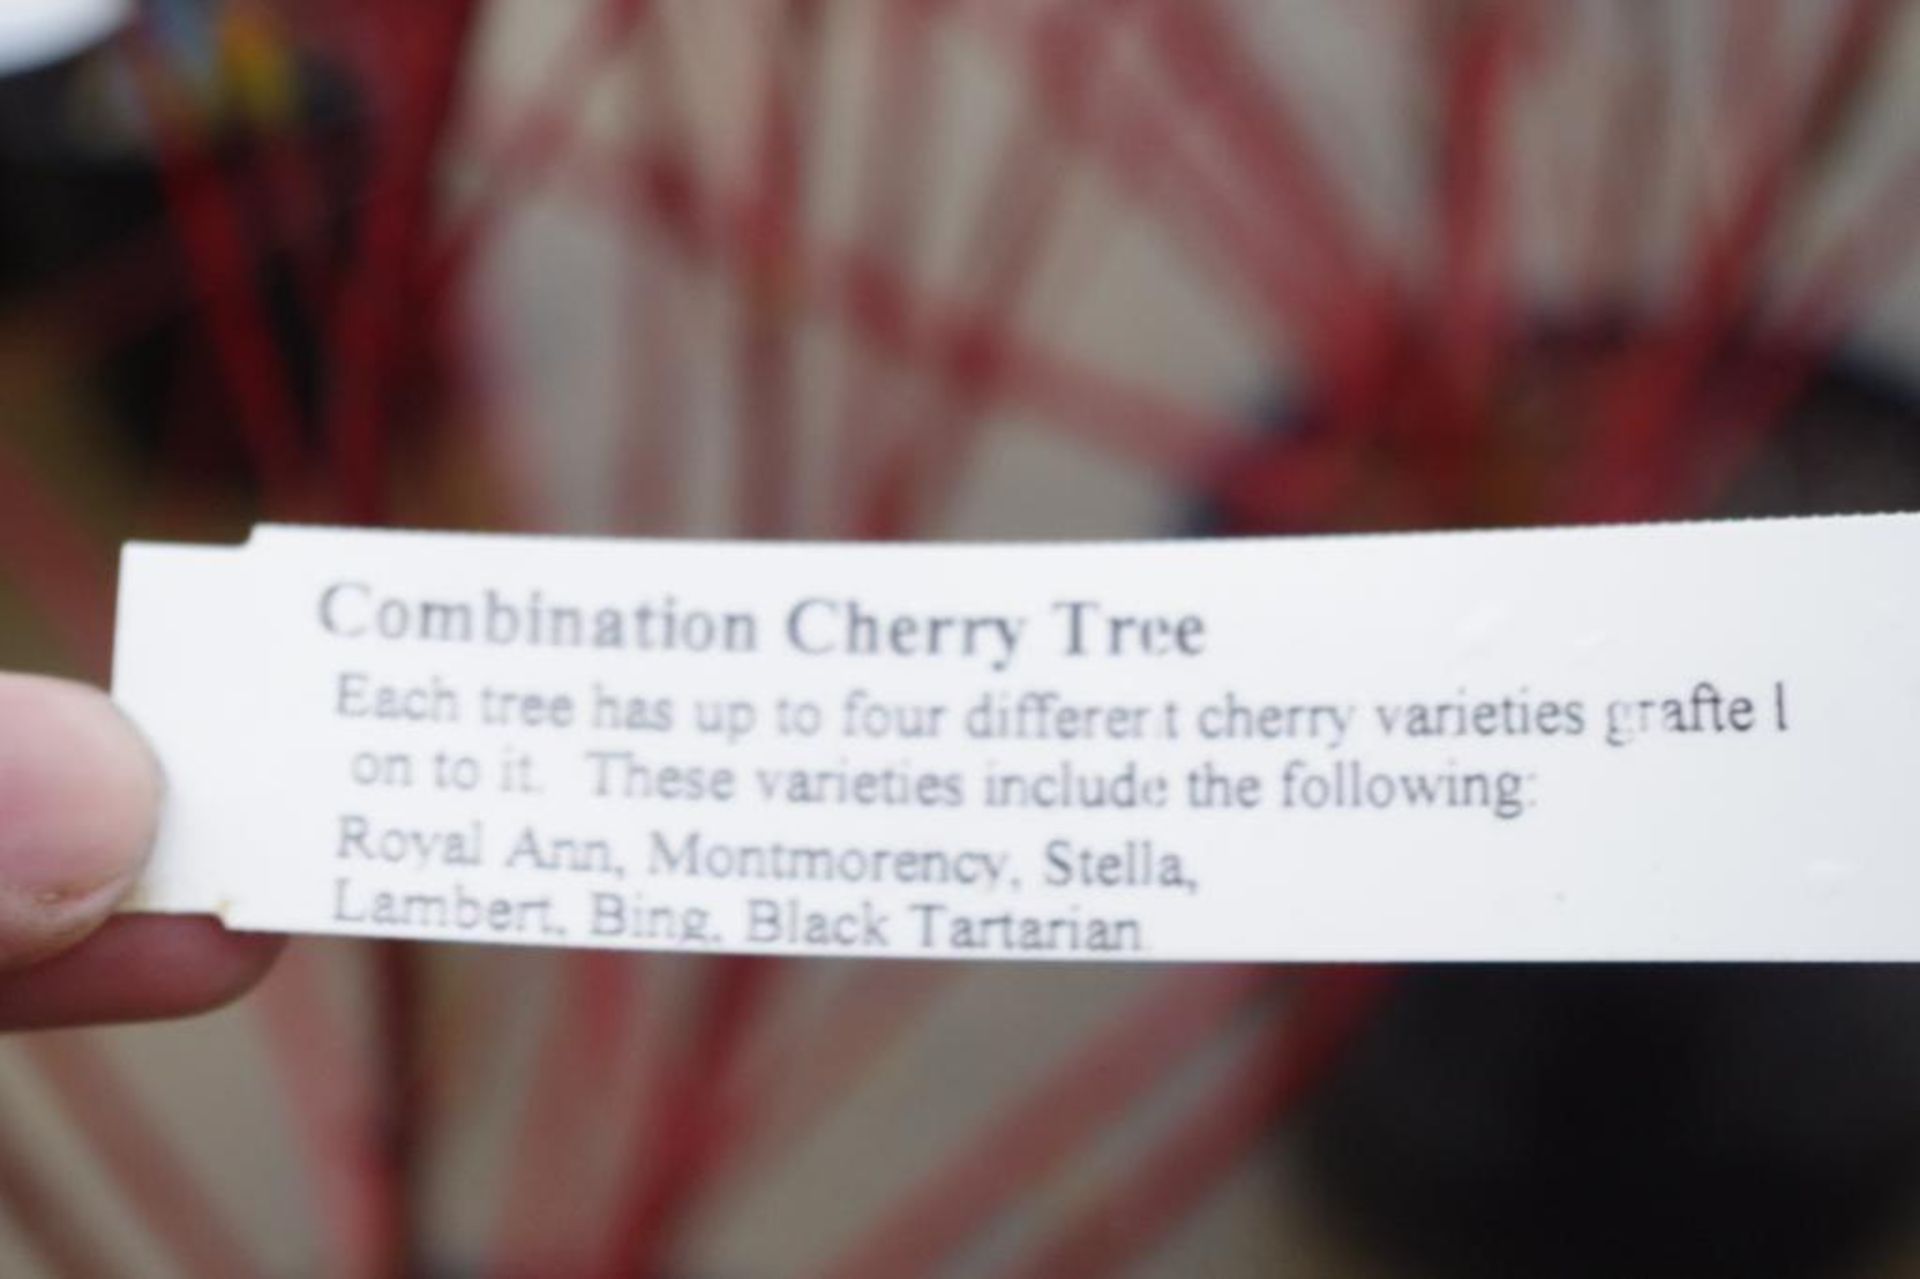 4-Way Combo Cherry Tree - Image 3 of 4